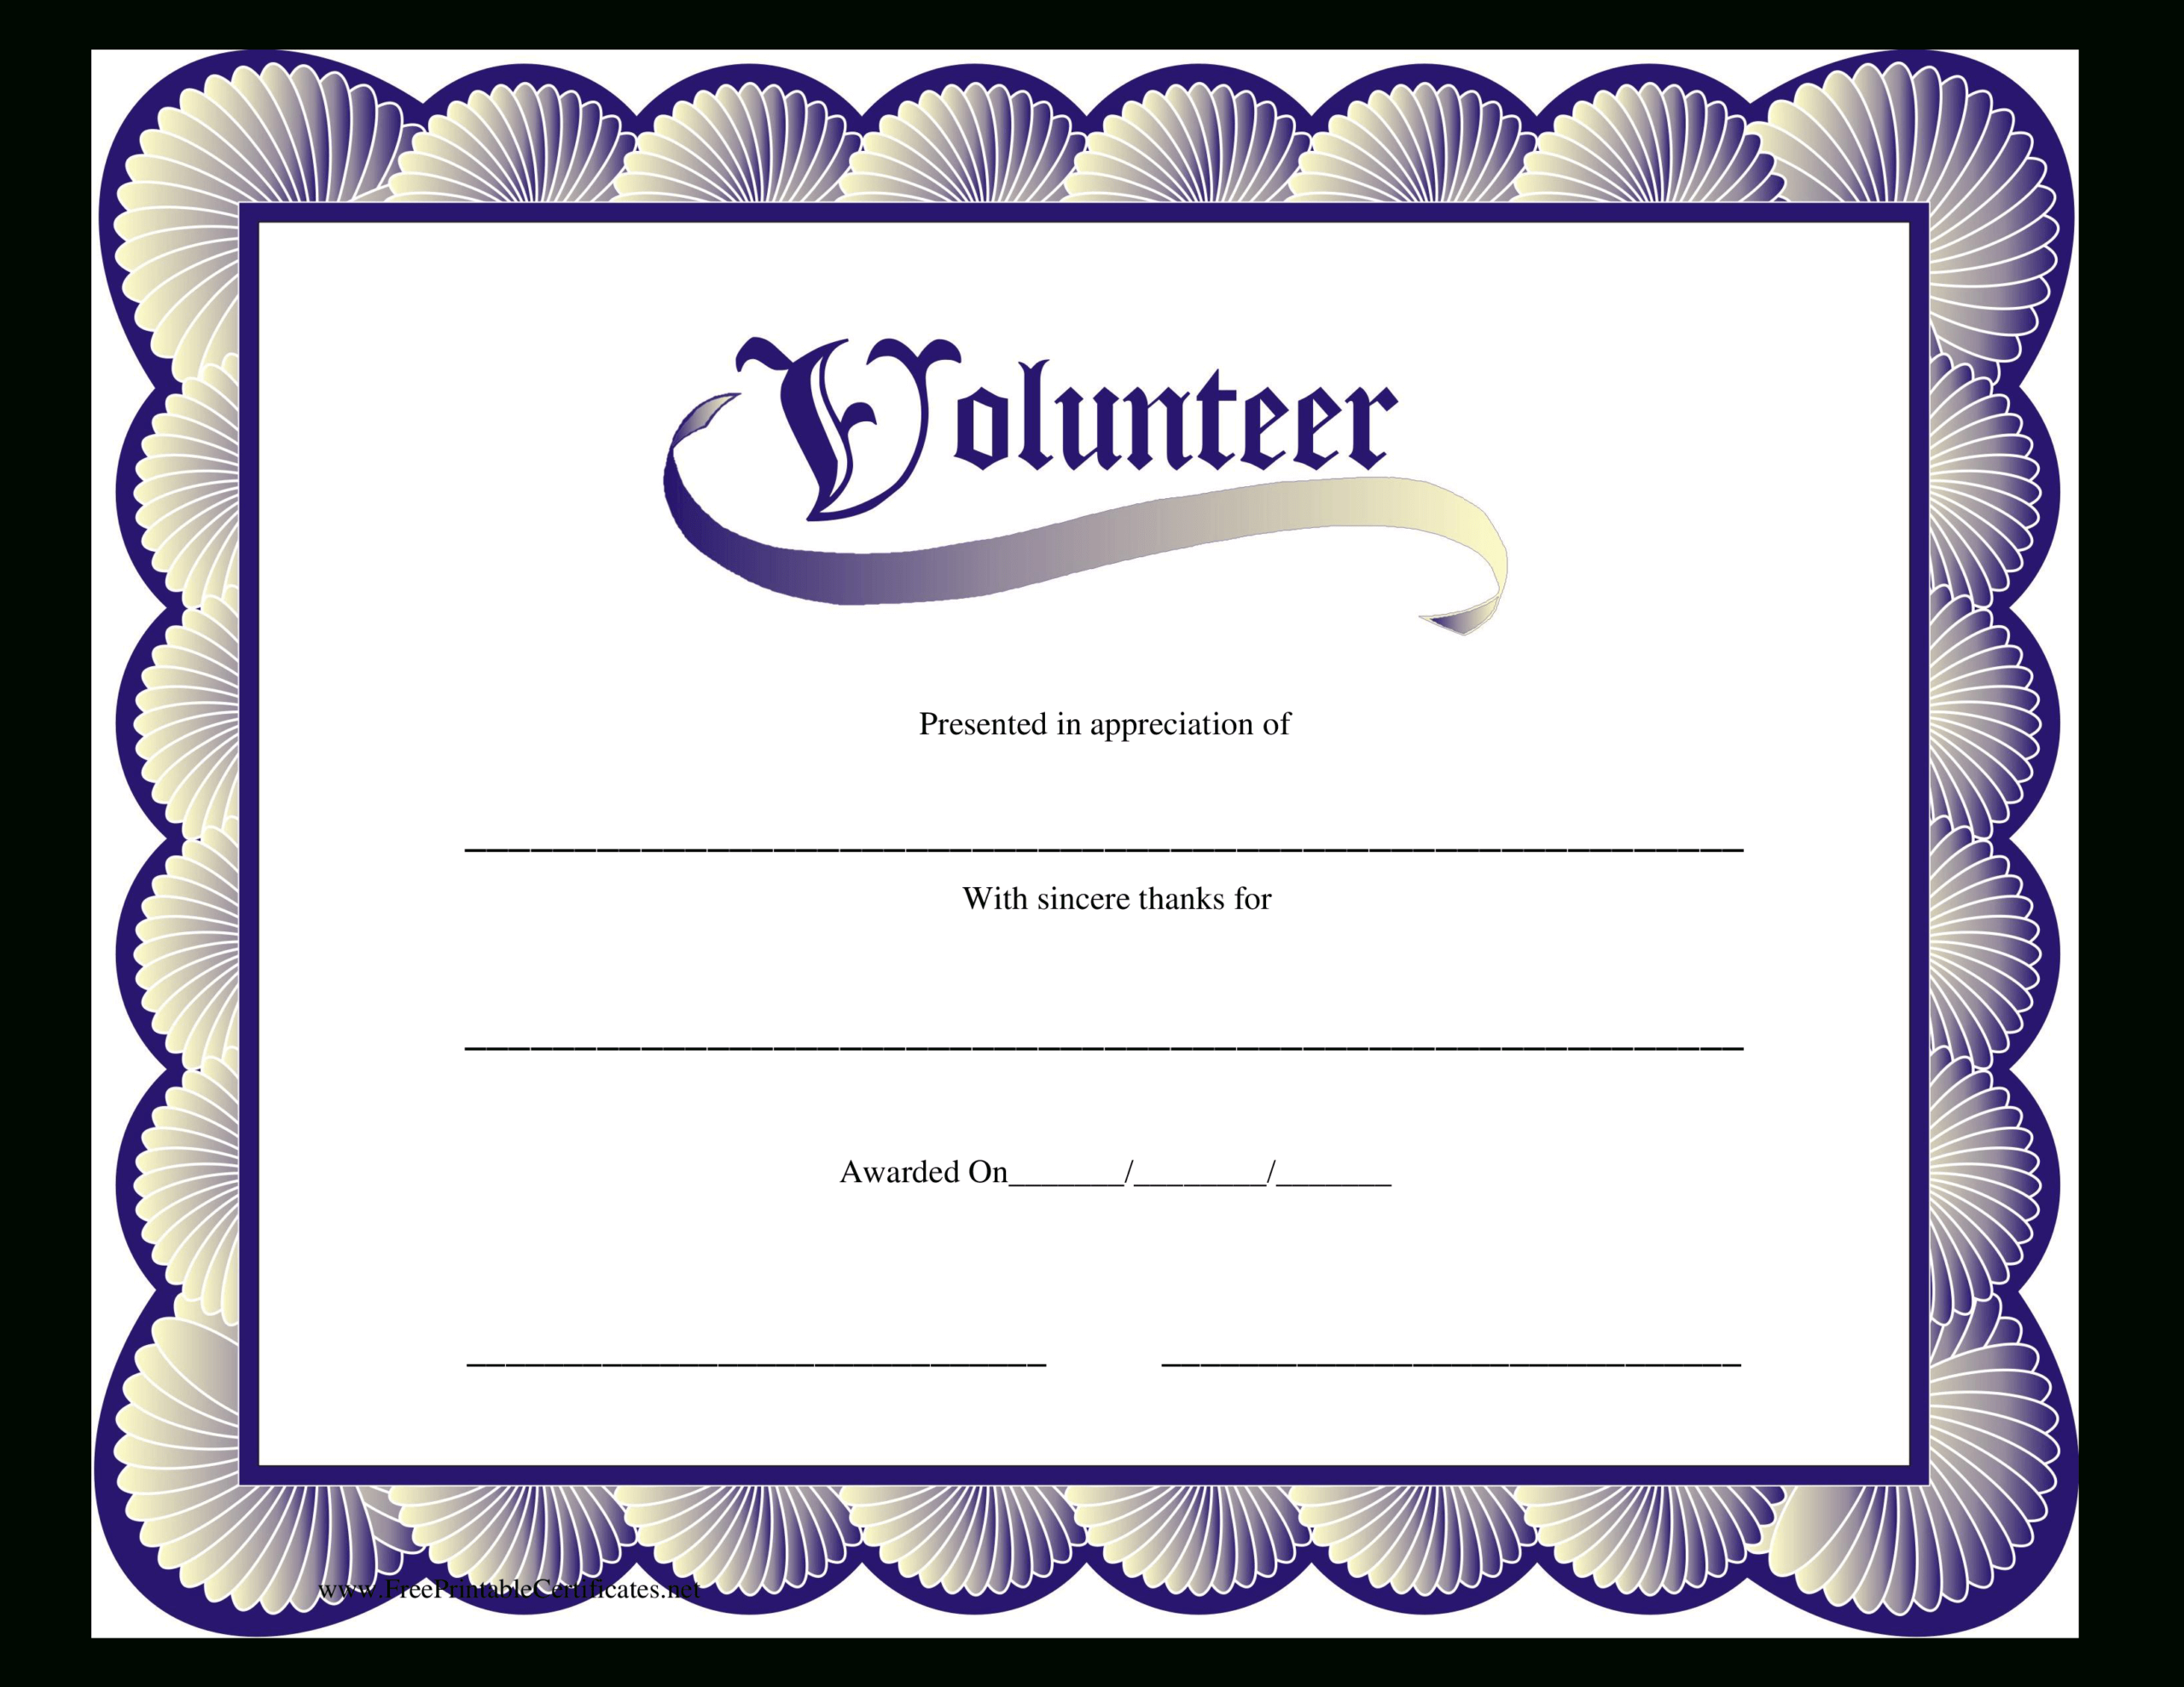 Volunteer Certificate | Templates At Allbusinesstemplates Pertaining To Volunteer Of The Year Certificate Template